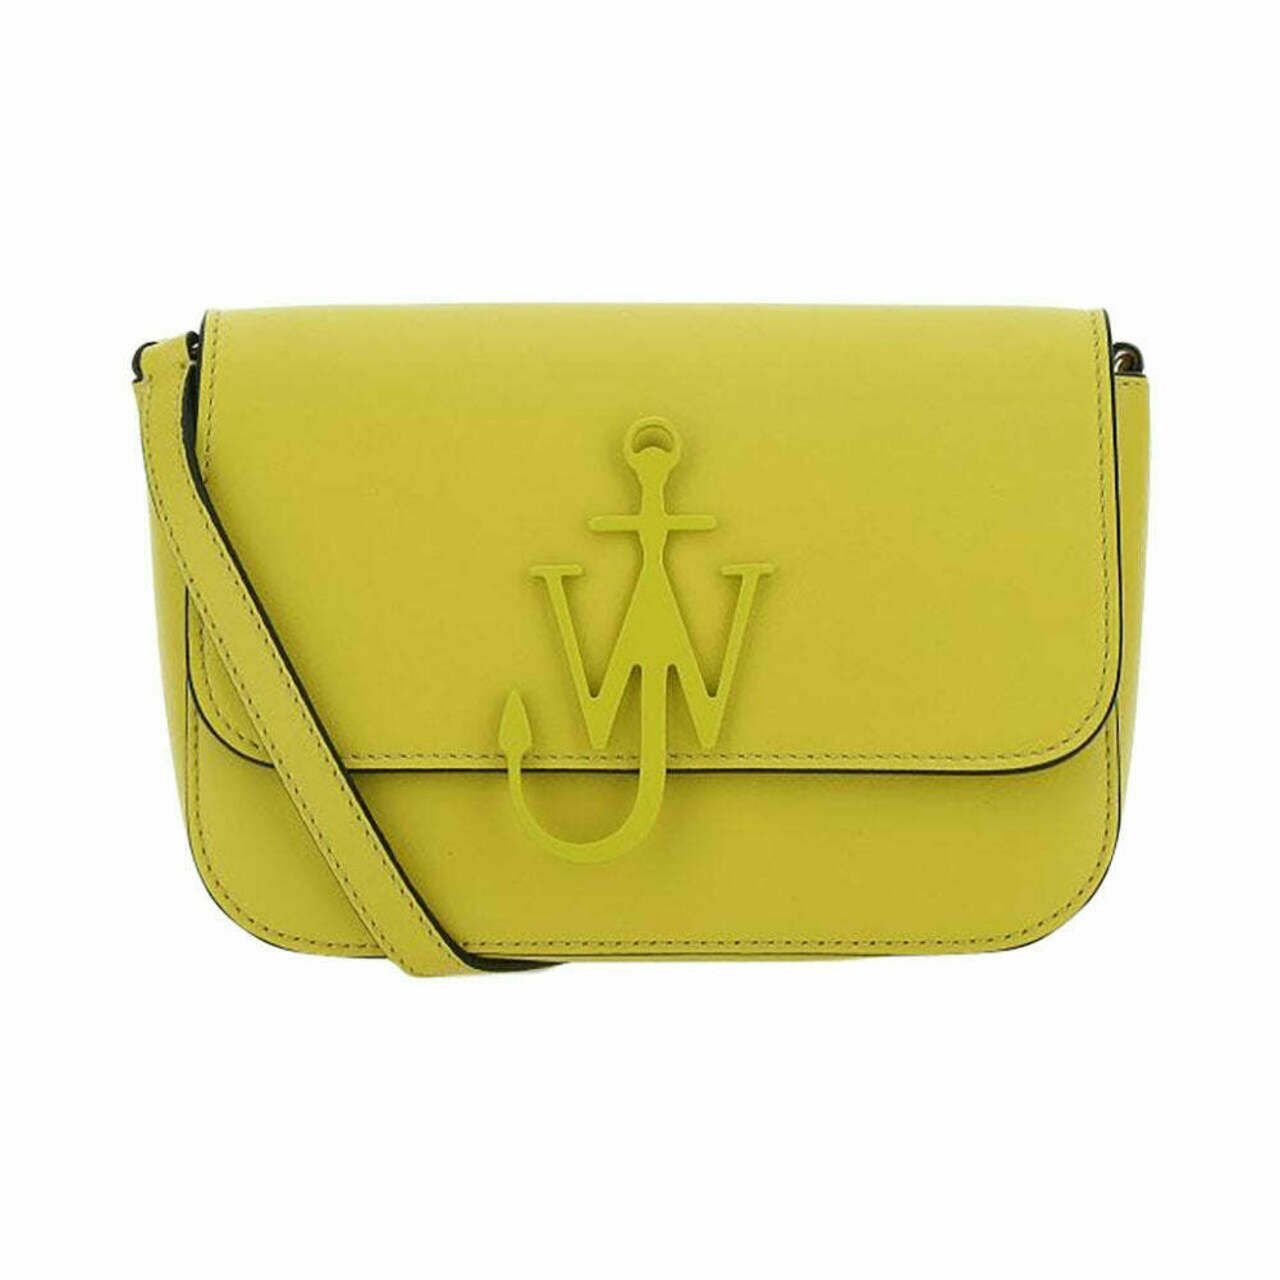 JW Anderson Yellow Sling Bag